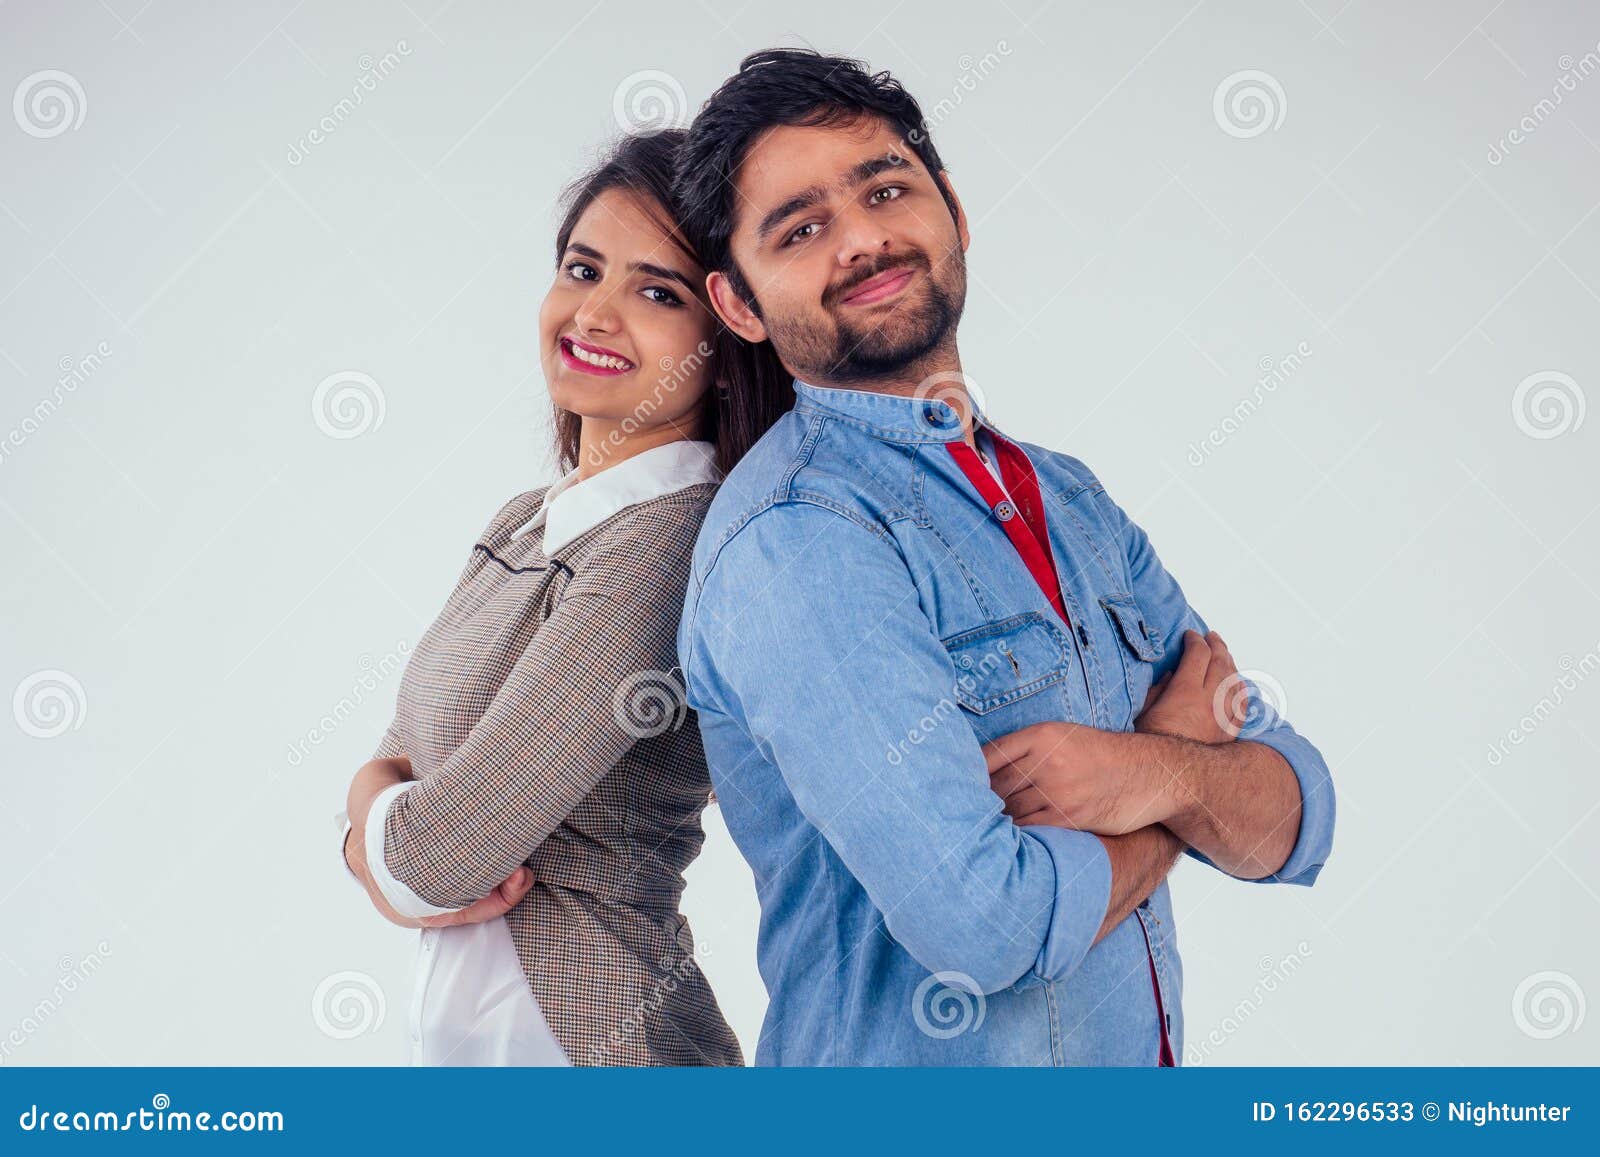 Best Studio Photoshoot Ideas for Couples - Lemon8 Search